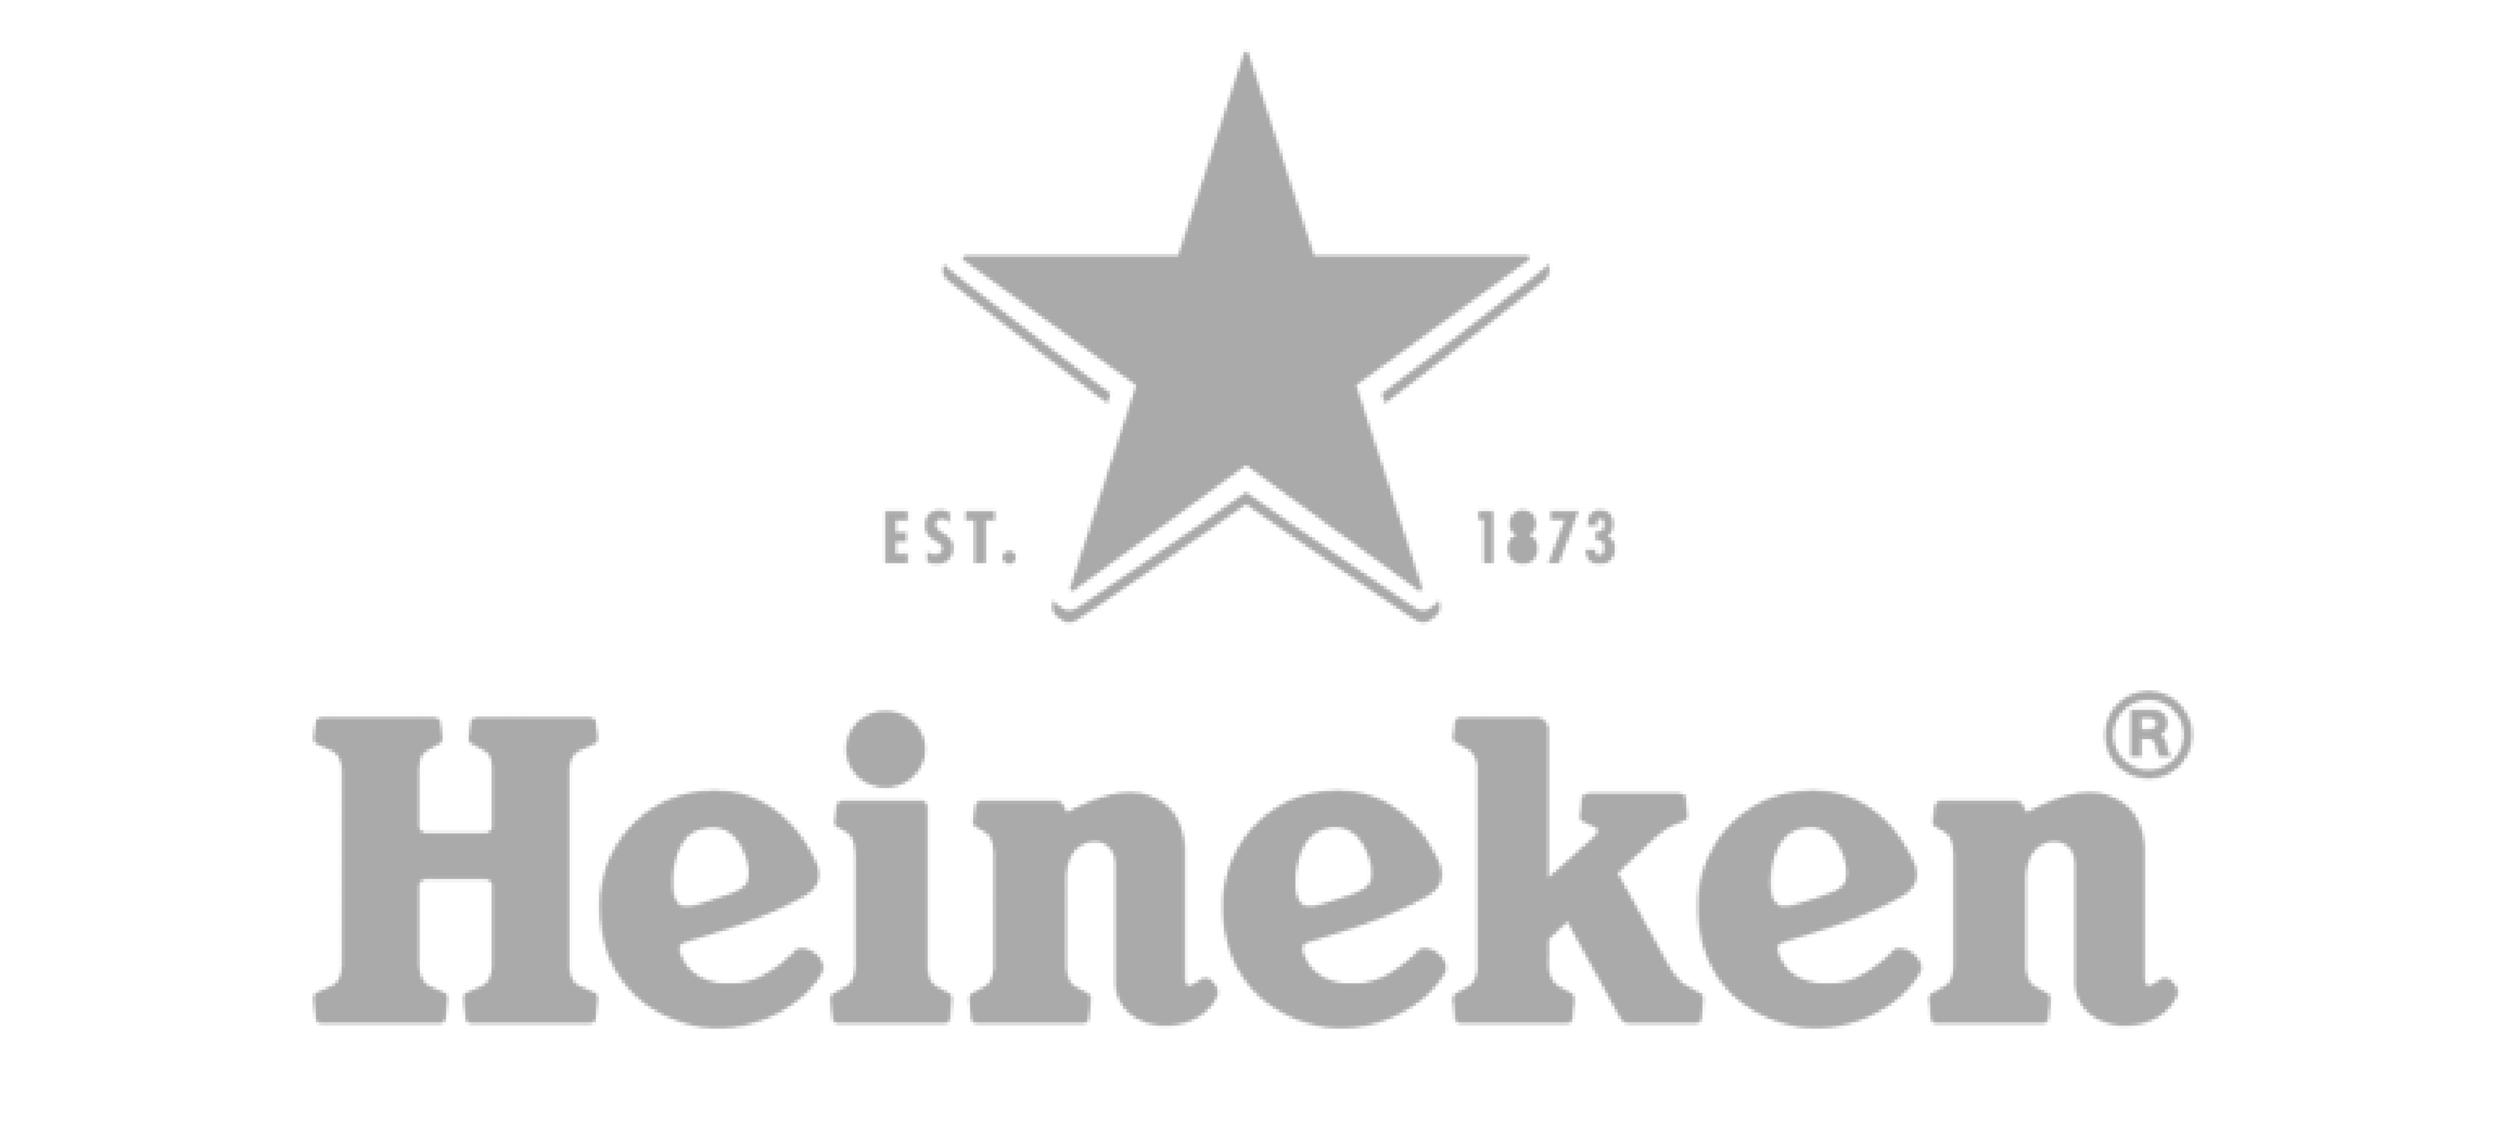 Heineken gray logo.png